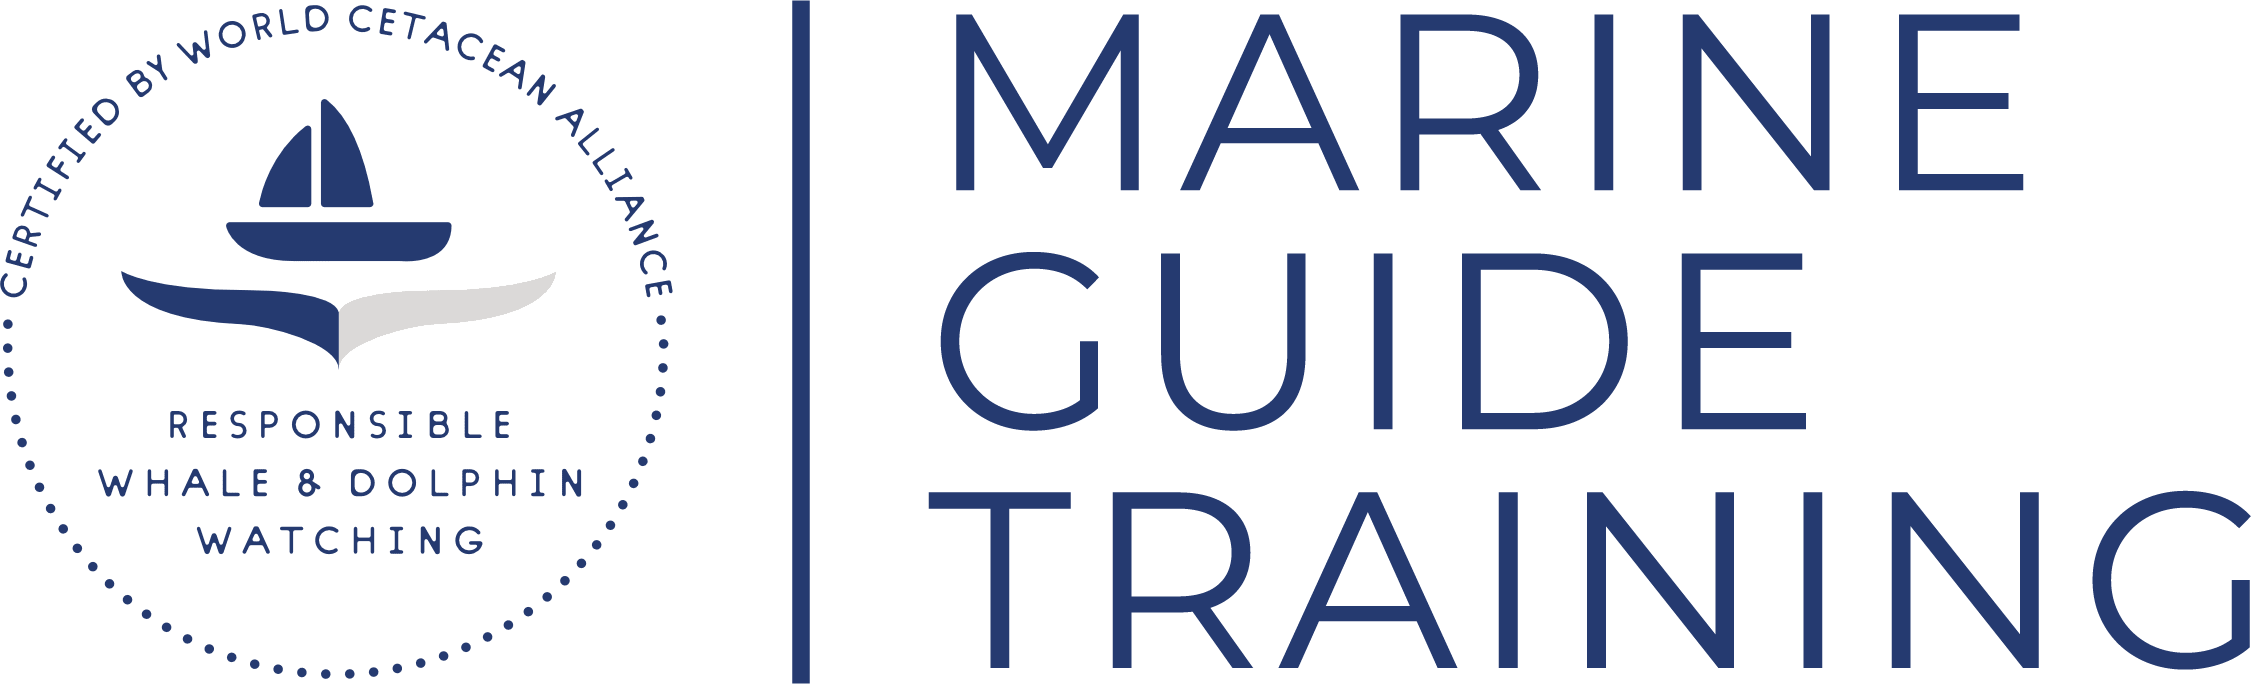 Marine Guide Training